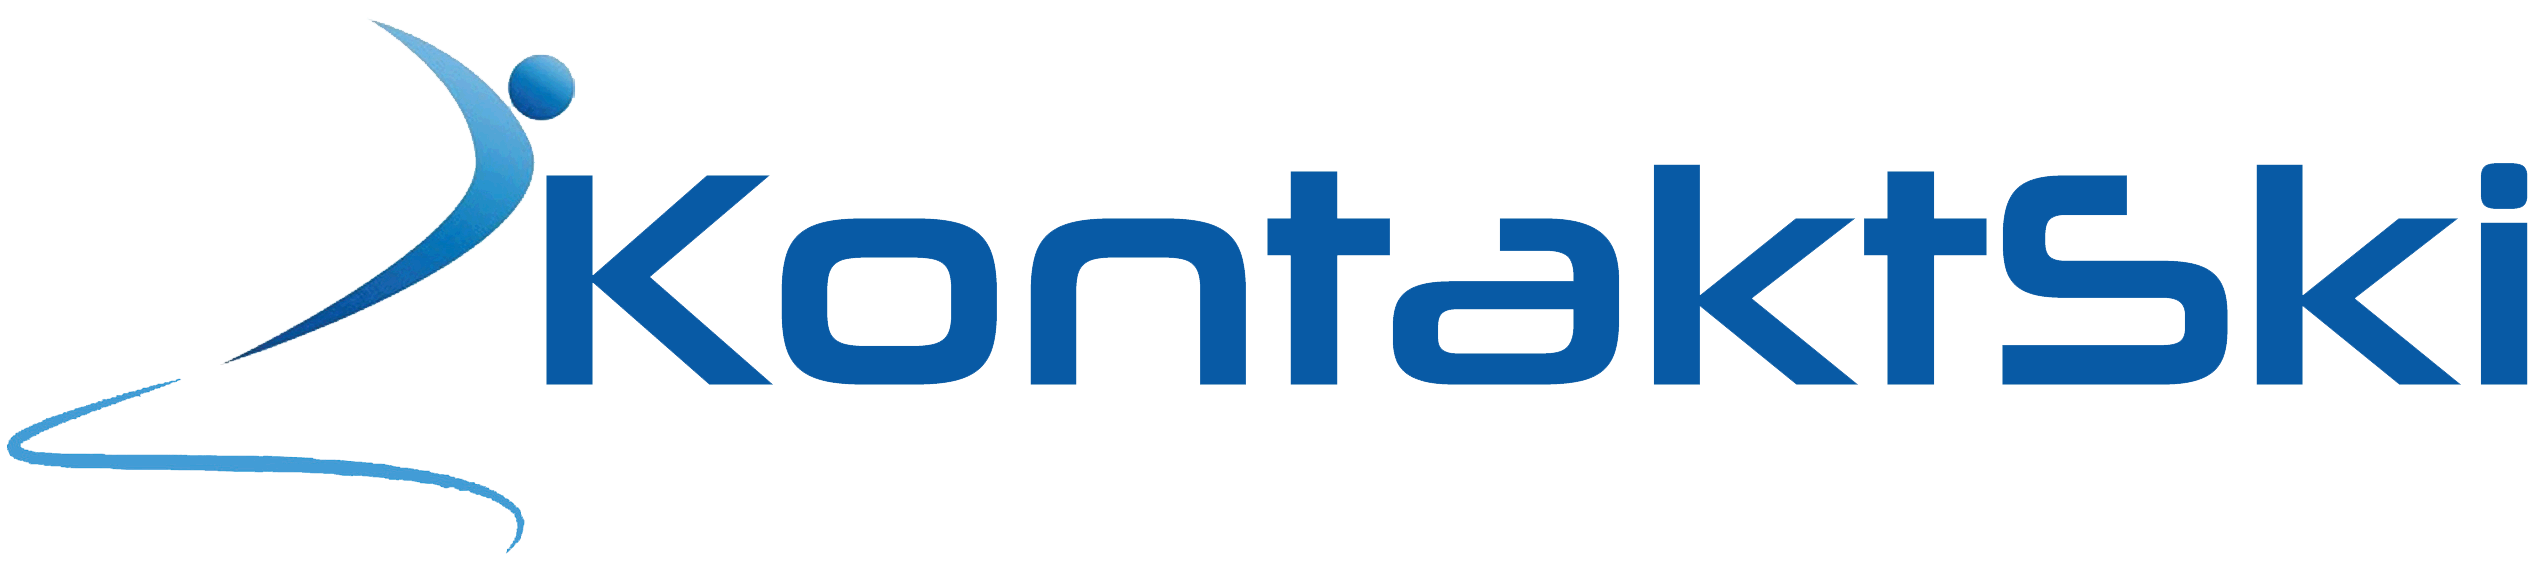 Kontakt Ski logo